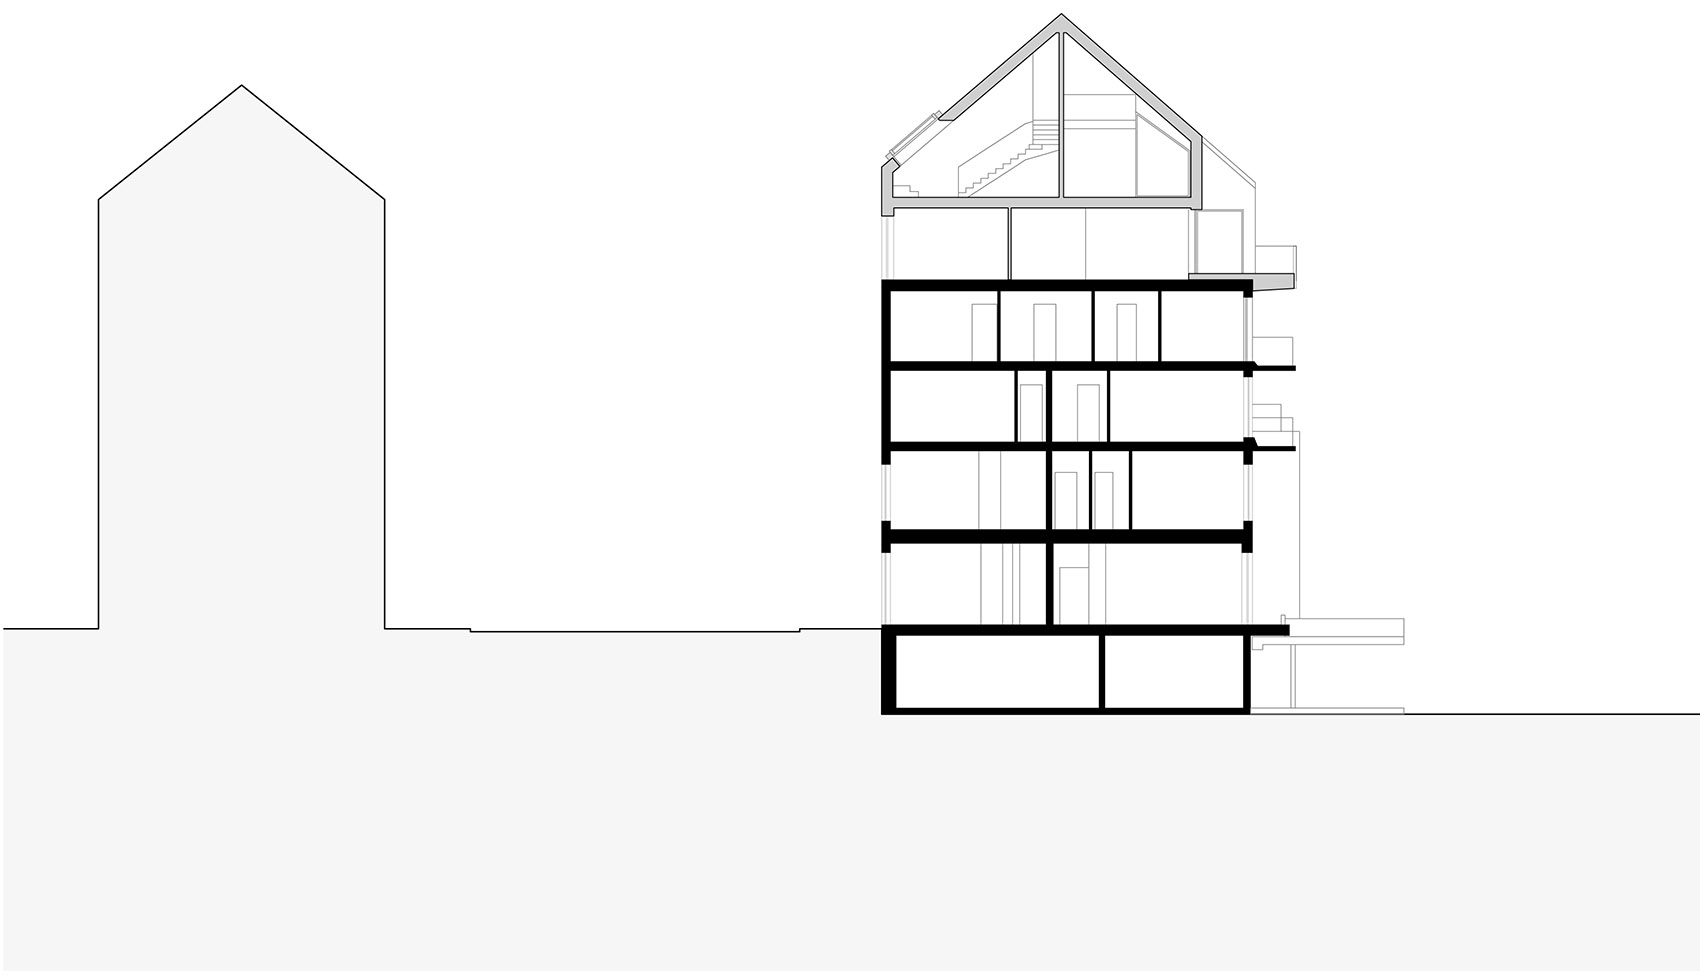 016-r11-roof-extension-maxvorstadt-by-pool-leber-architekten.jpg